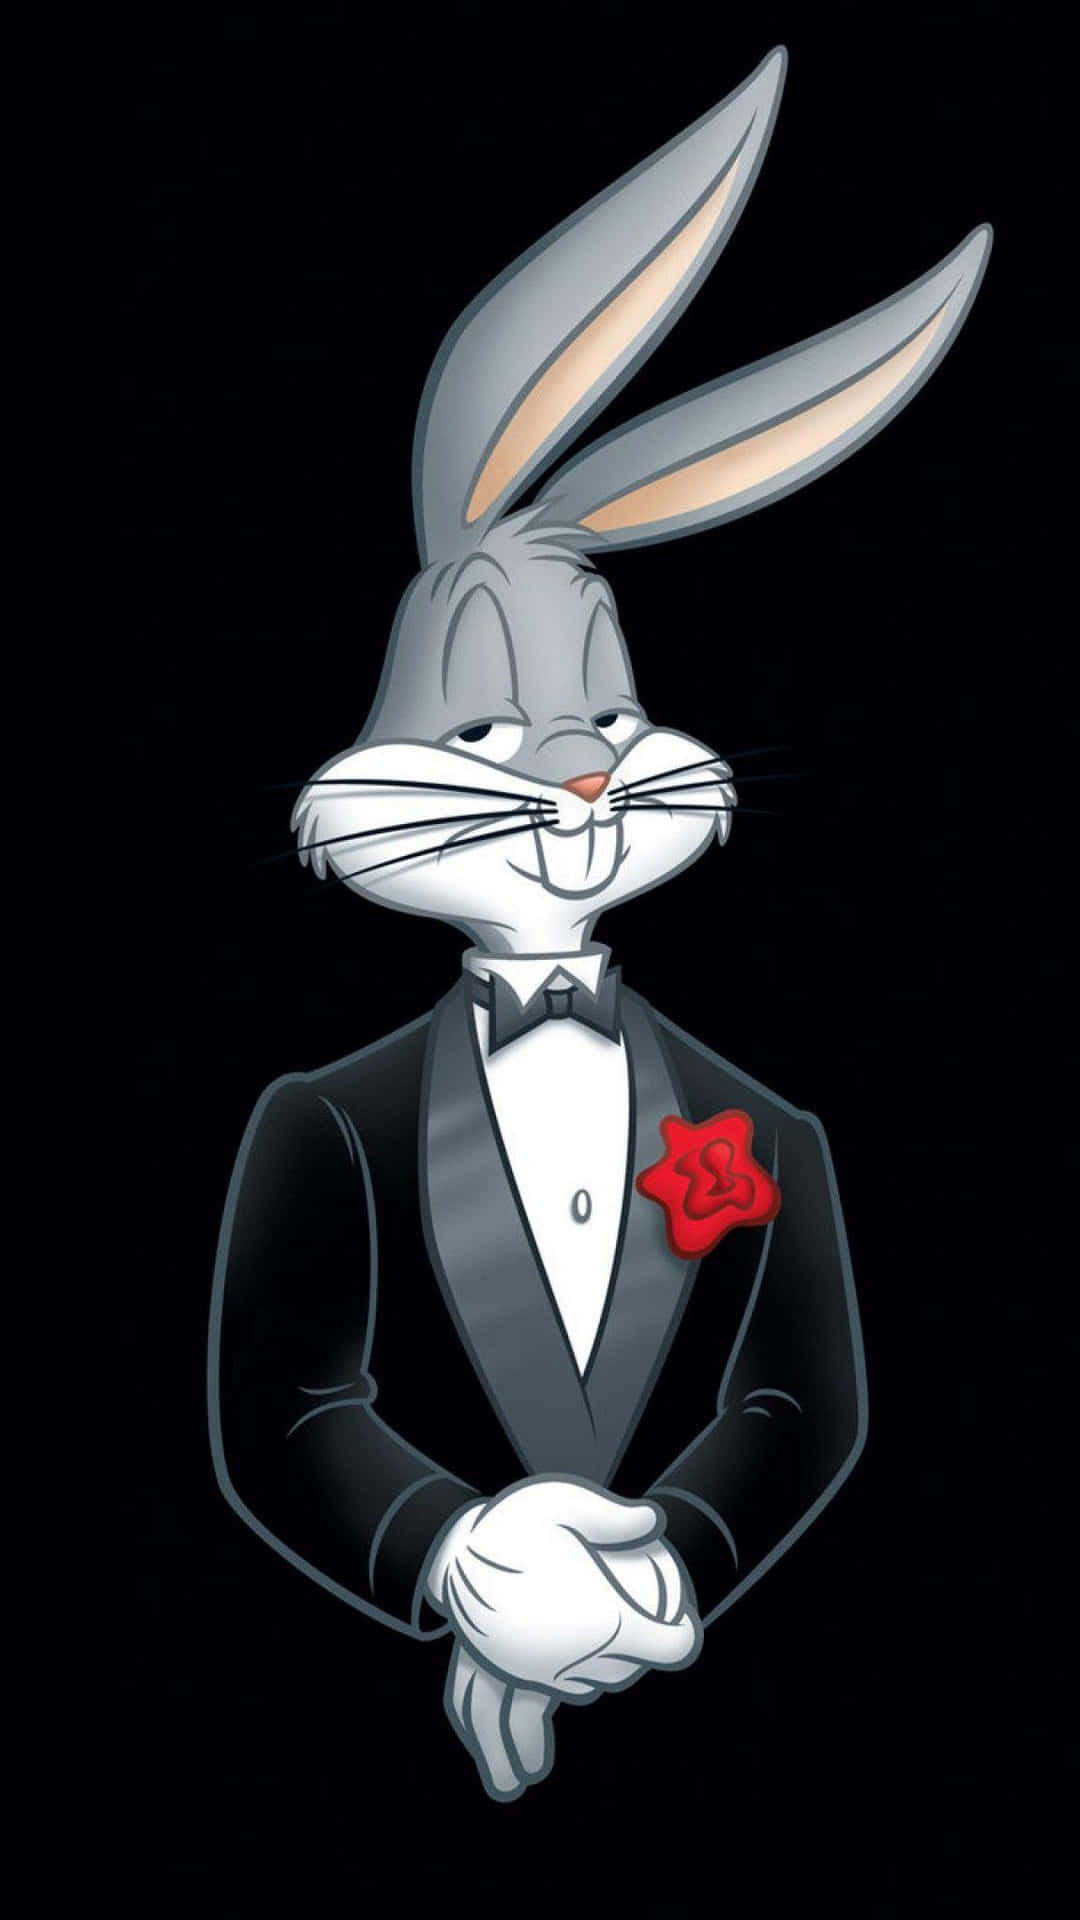 “A Classic Cartoon Character - Bugs Bunny”